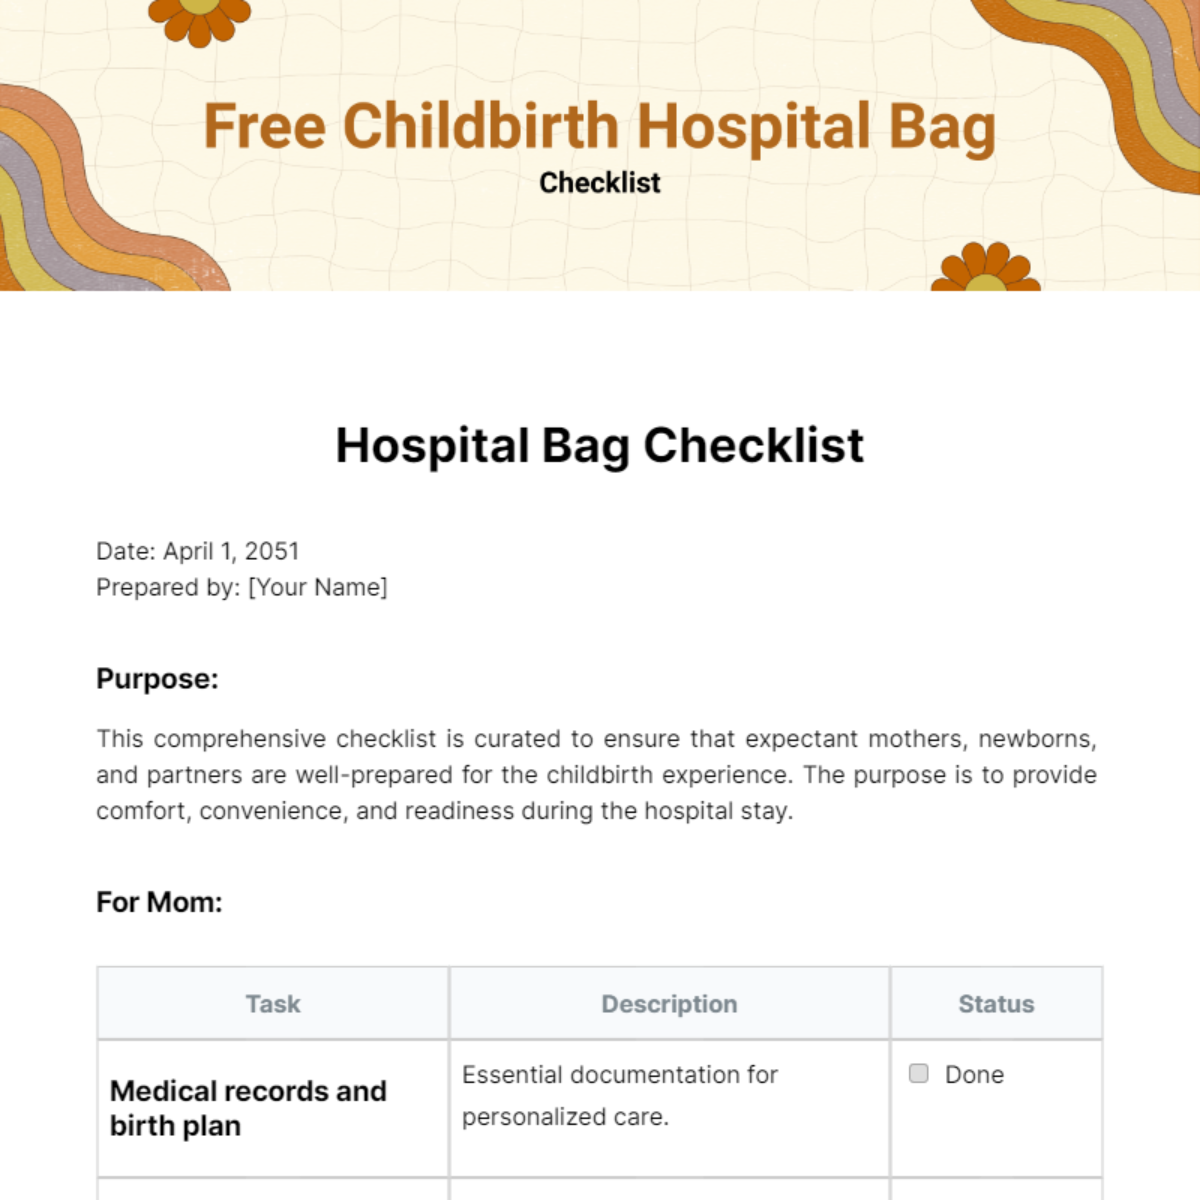 Free Childbirth Hospital Bag Checklist Template